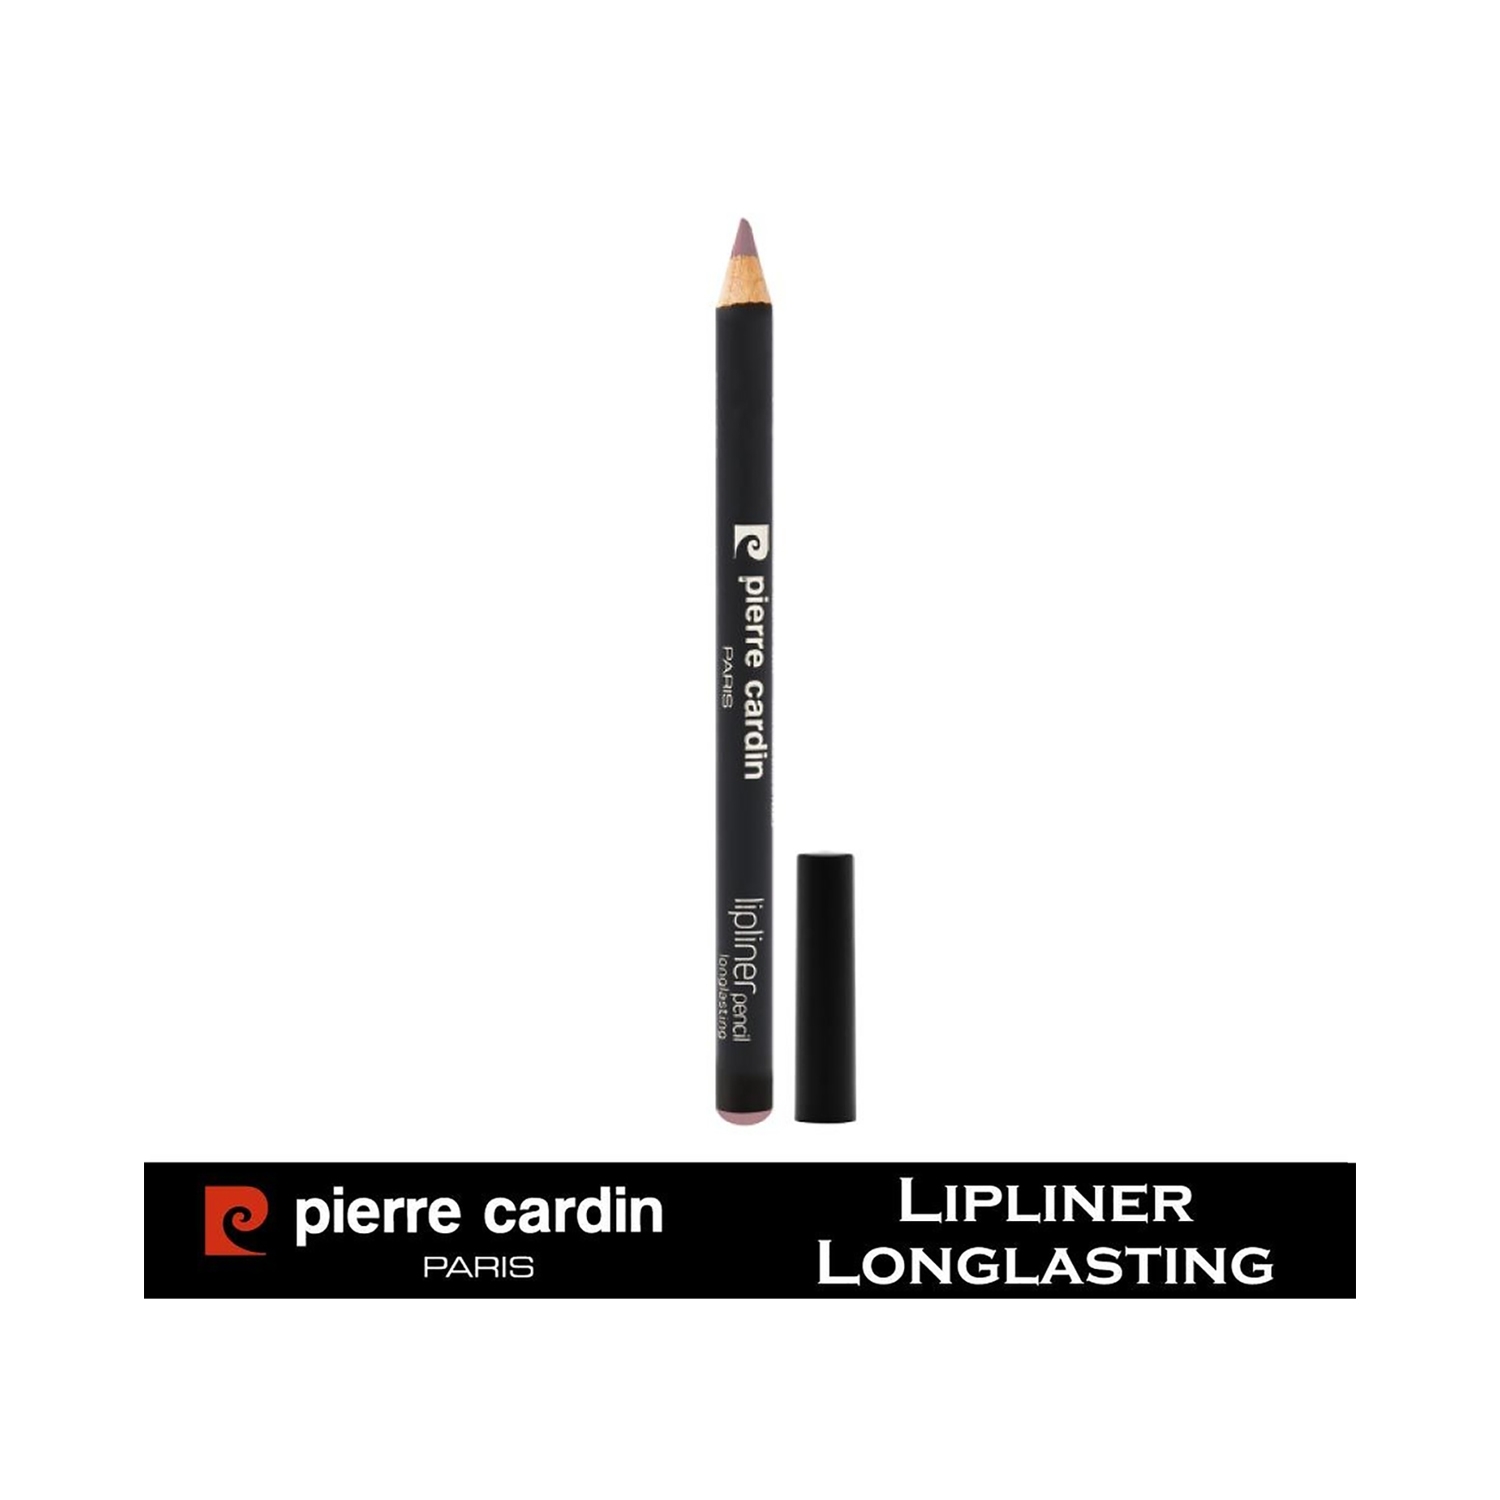 Pierre Cardin Paris | Pierre Cardin Paris Longlasting Lip Liner Pencil - 495 Baby Lips (0.4g)